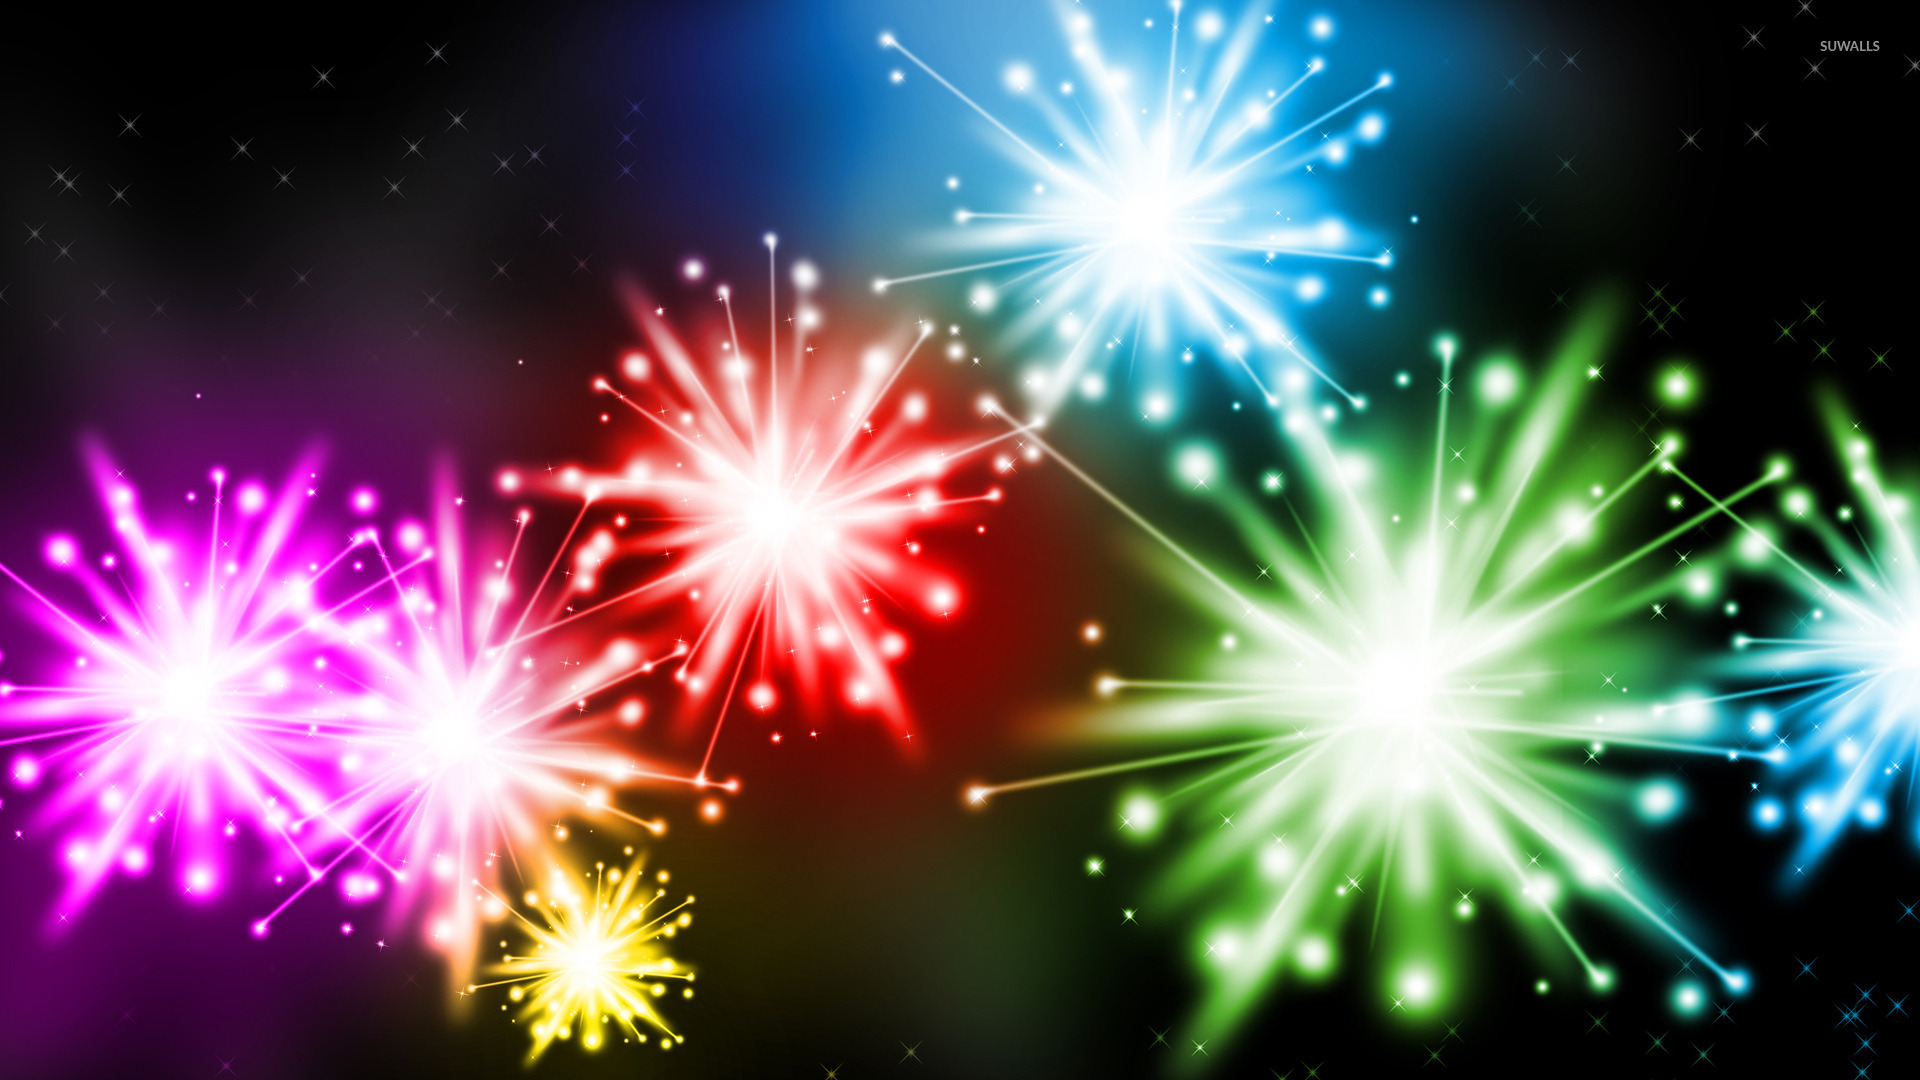 Free Download Fireworks Wallpaper Colorful Fireworks Image 27821